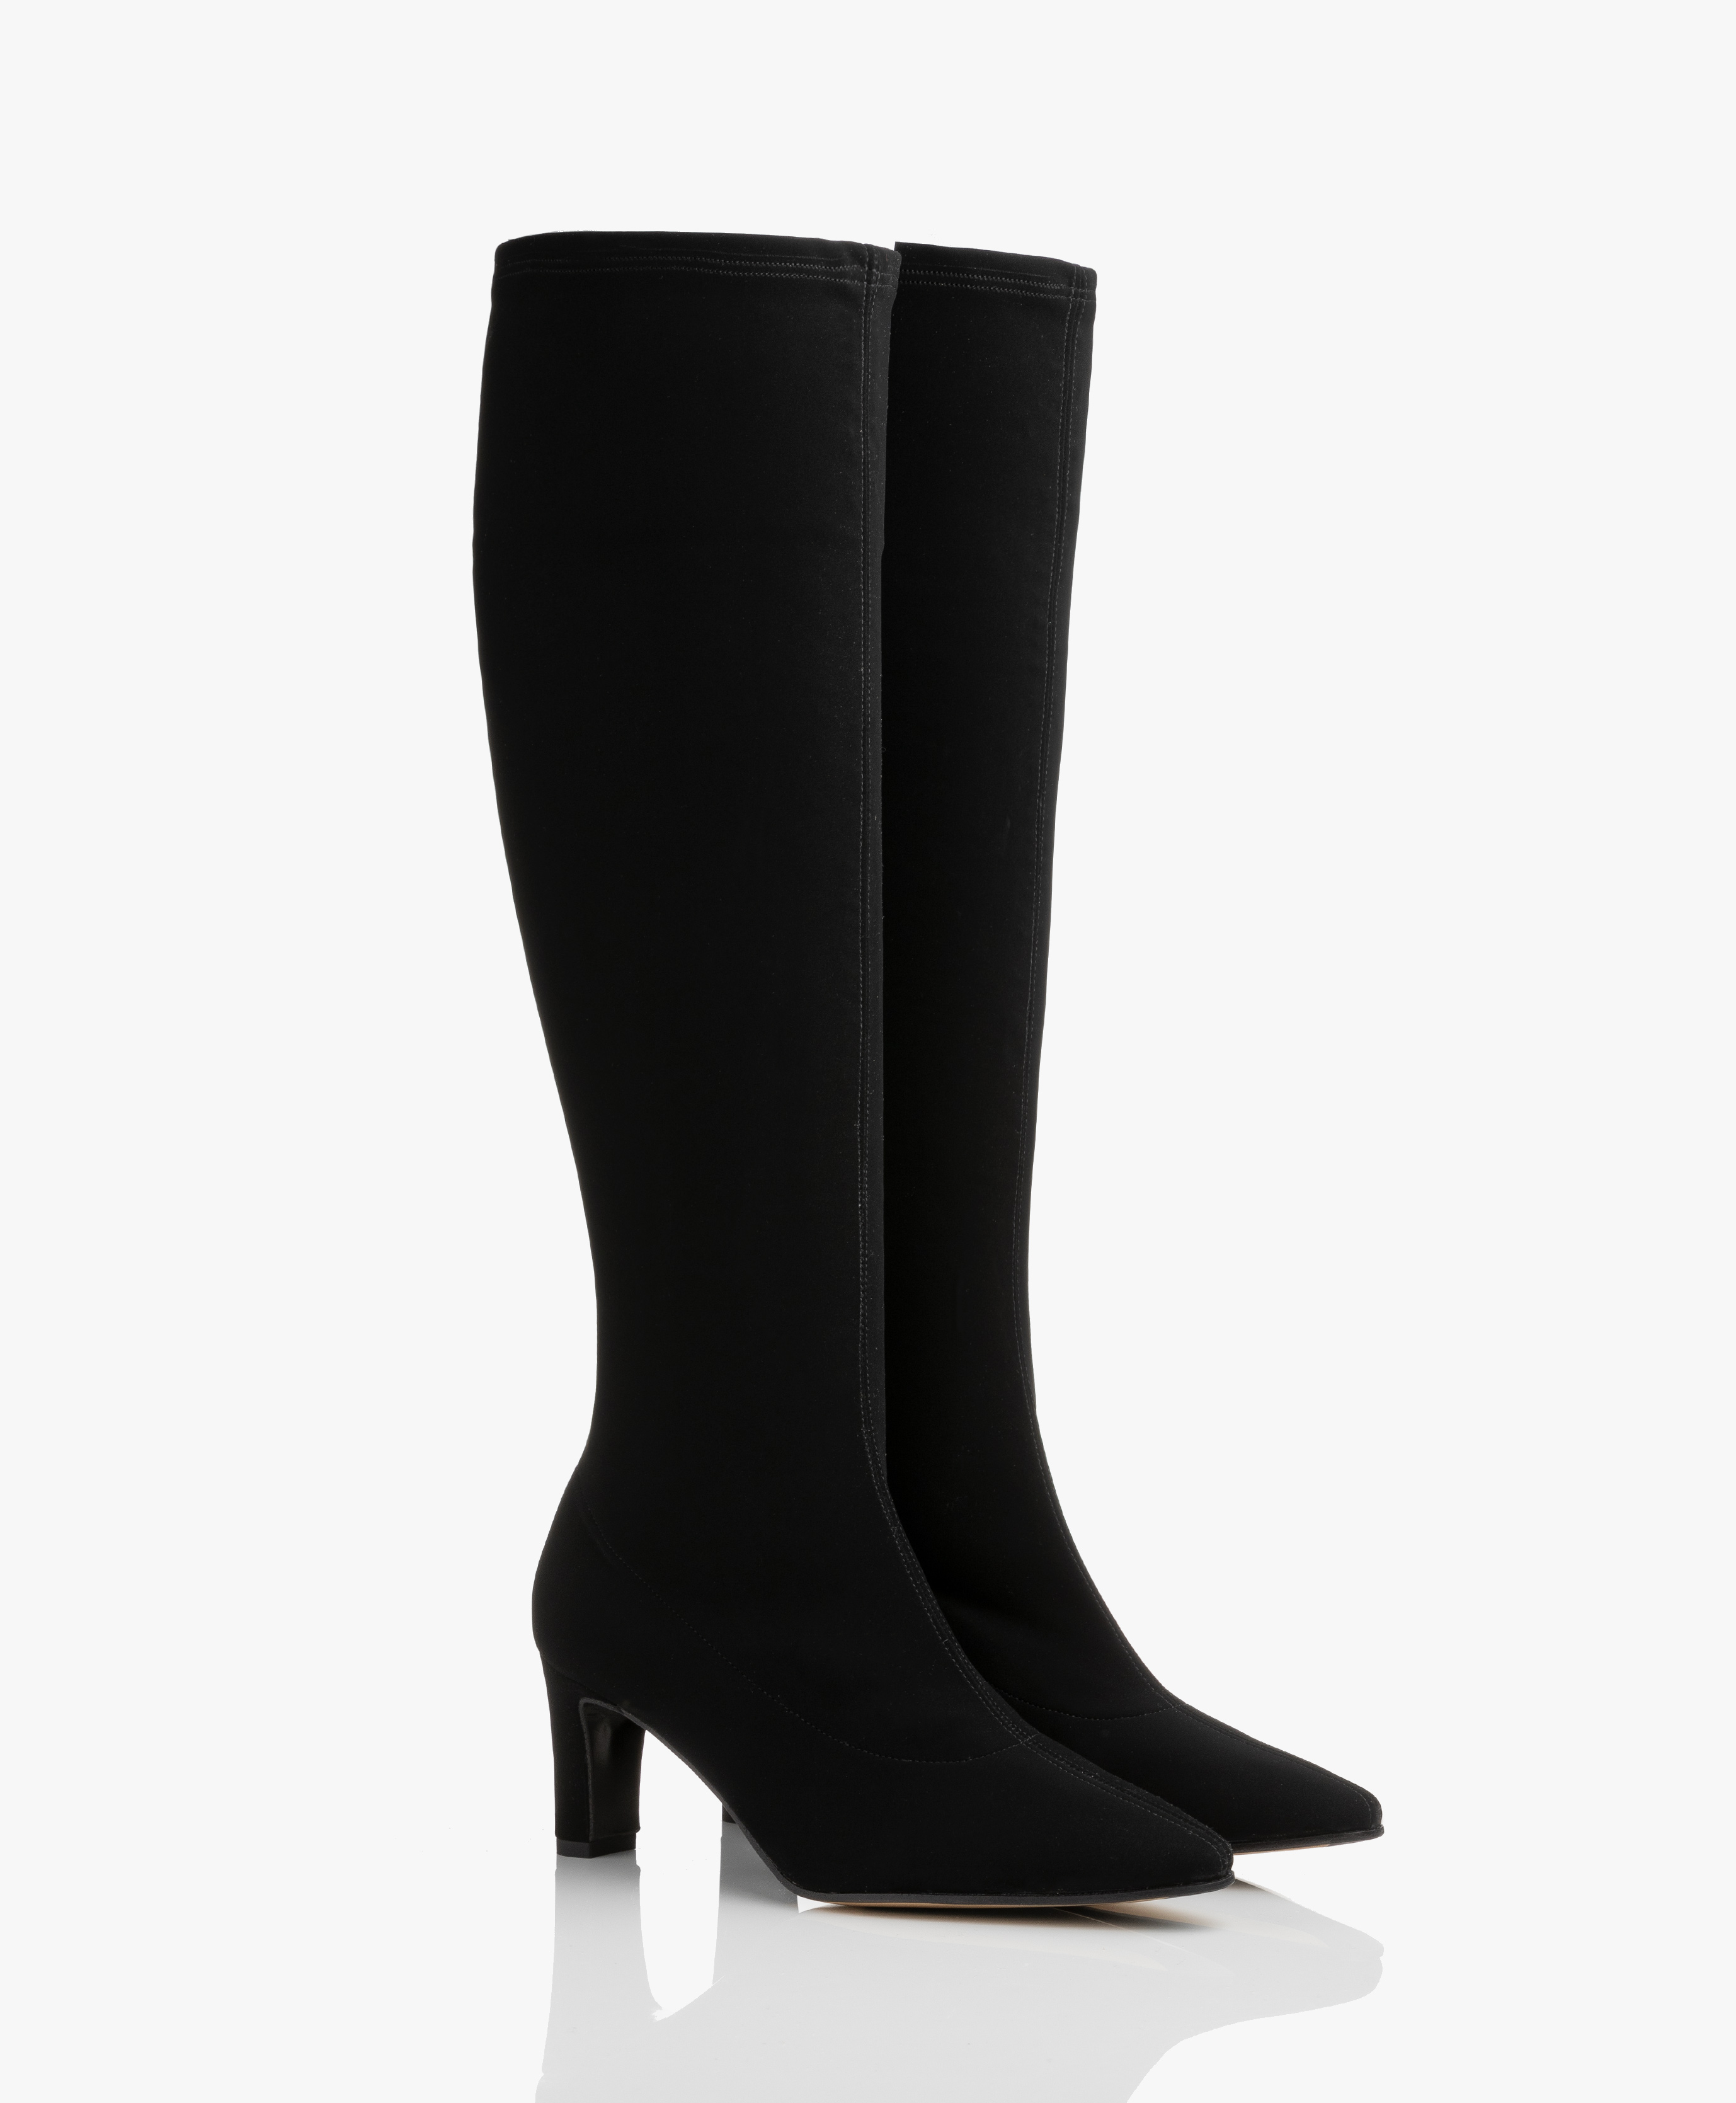 Panara Knee-high Boots - Black - v2276 nalas nero